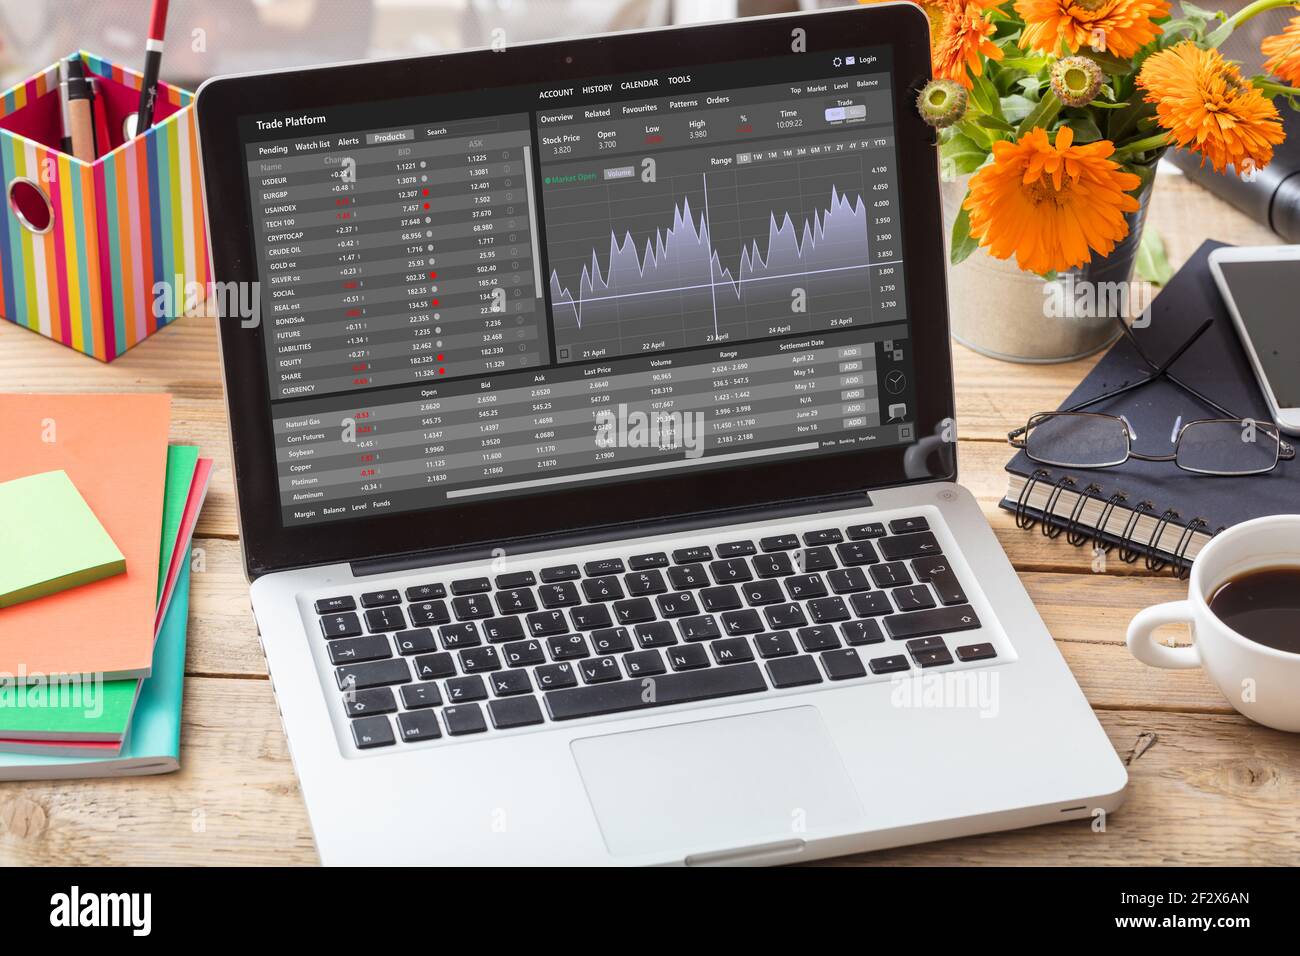 Trade platform, forex trading. Stock exchange market analysis, monitoring app on laptop screen, office desk background. Binary option, candlestick cha Stock Photo